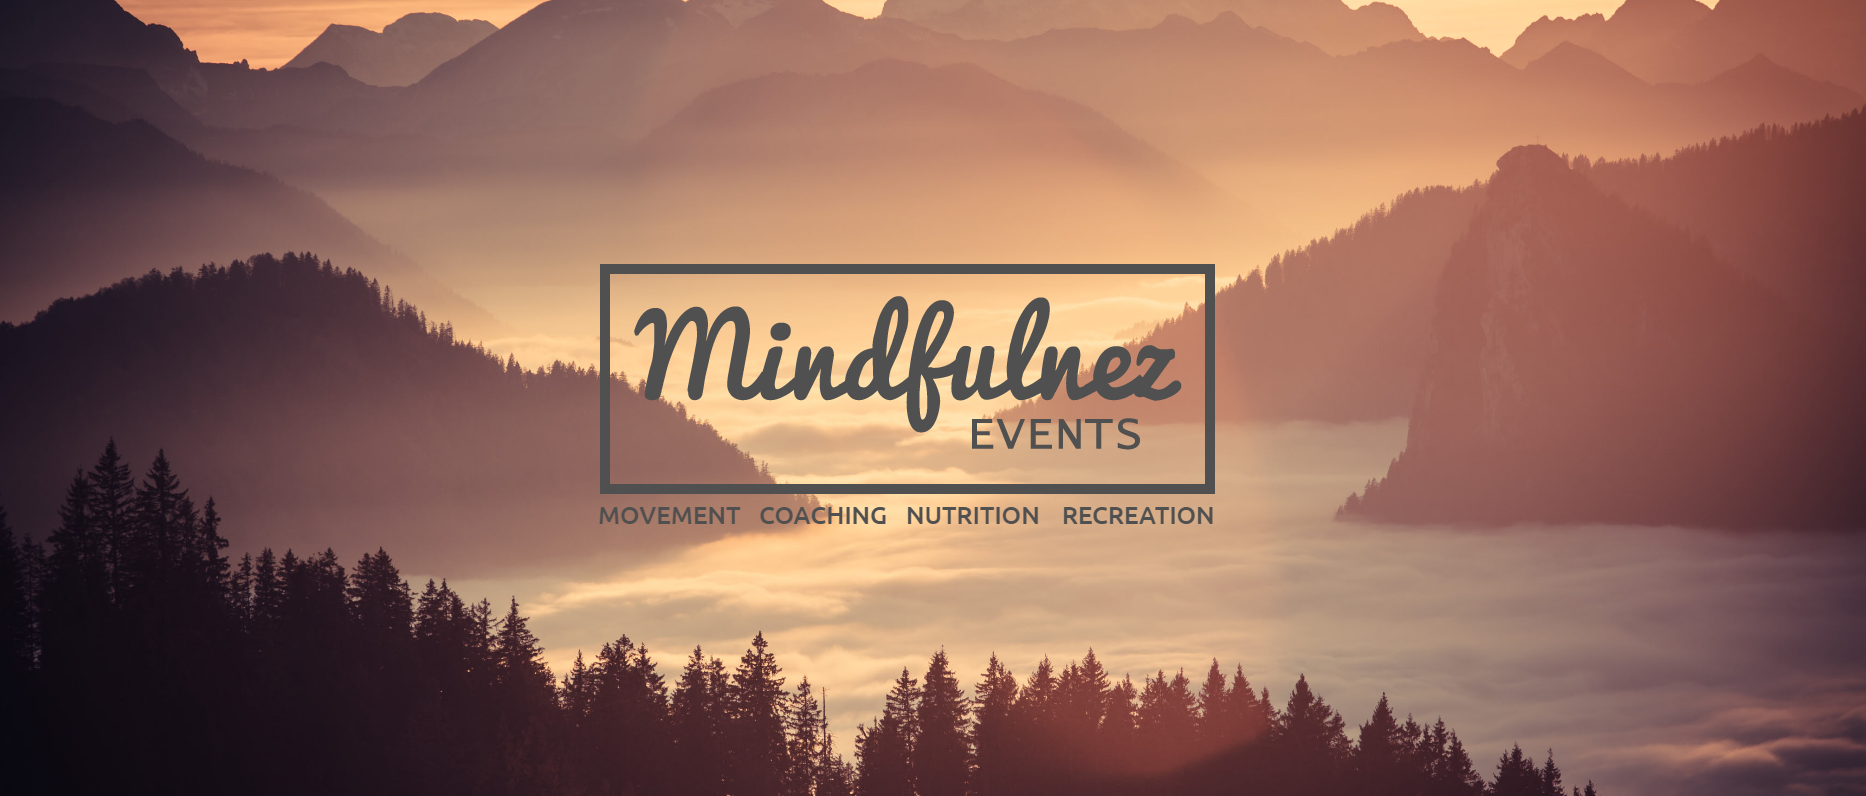 mindfulnez-events